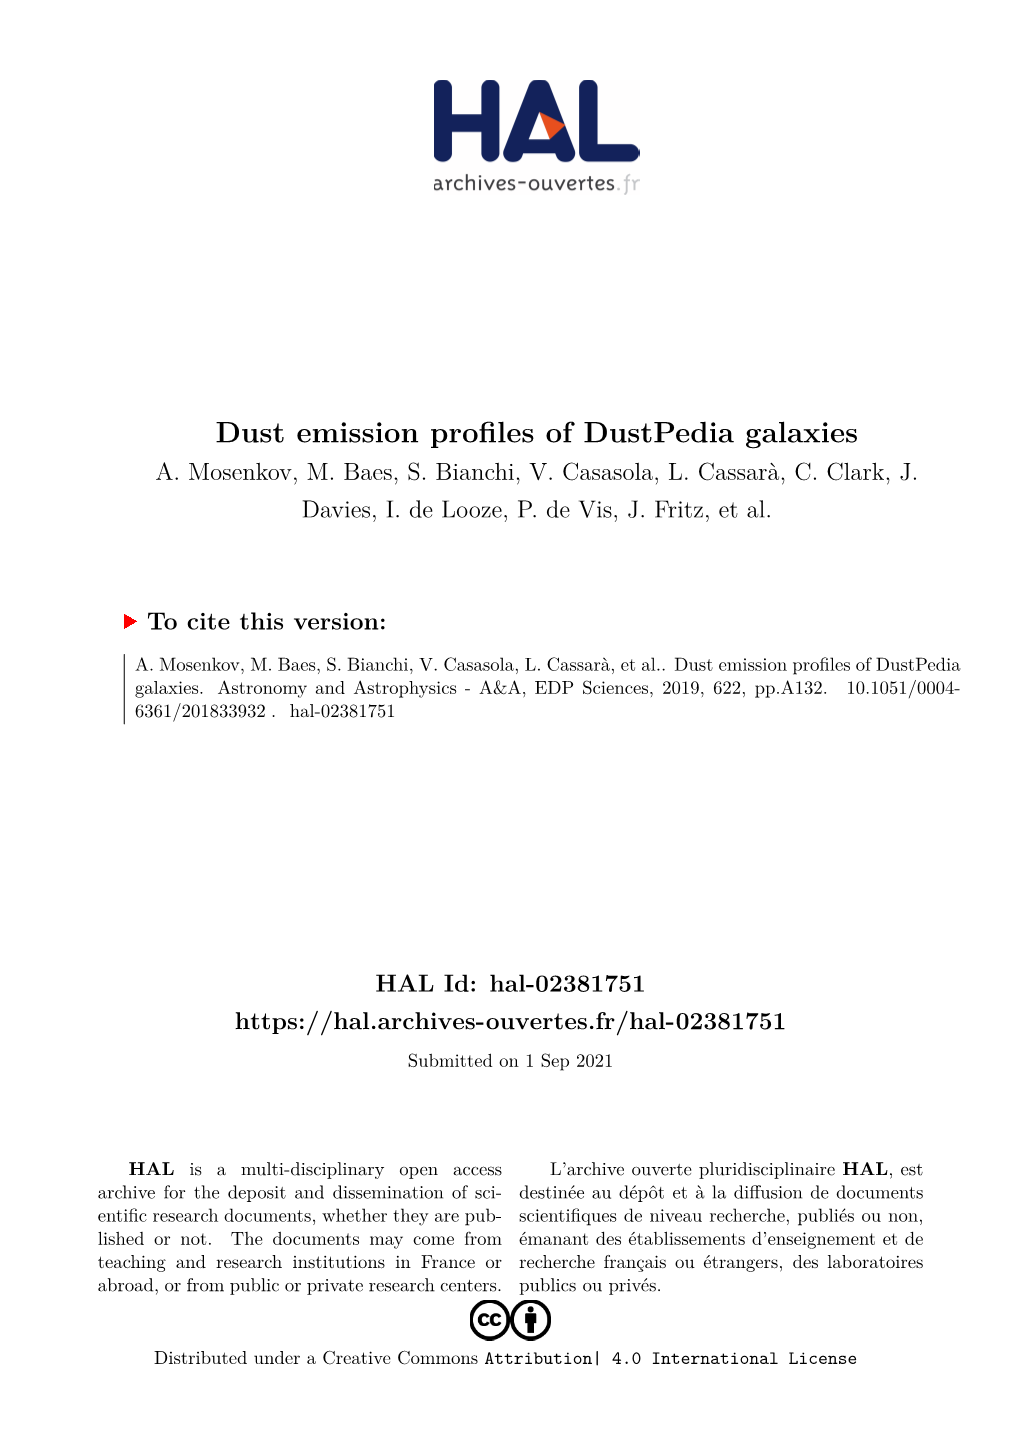 Dust Emission Profiles of Dustpedia Galaxies A